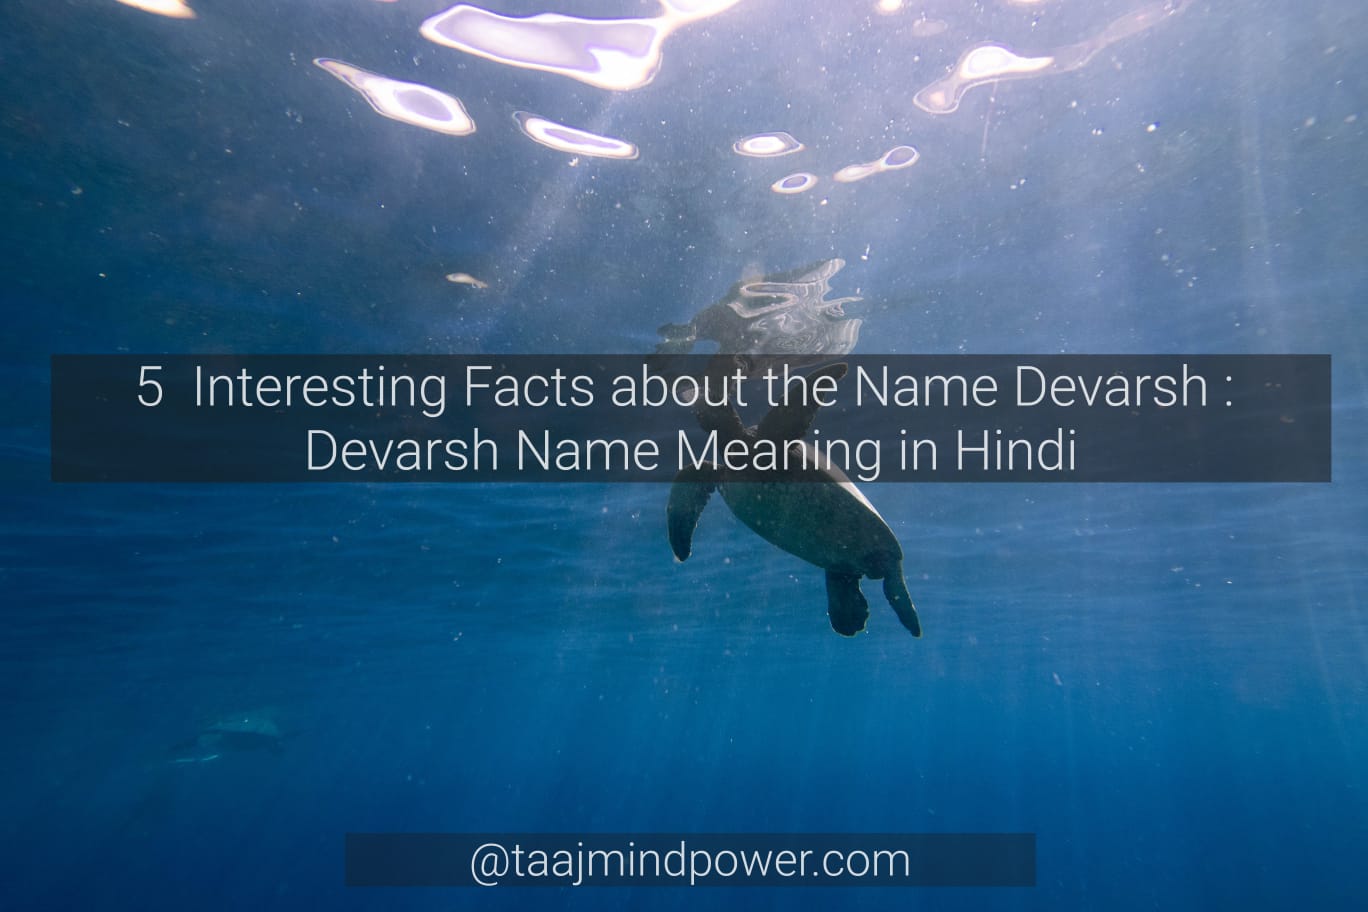 Devarsh Name Meaning in Hindi